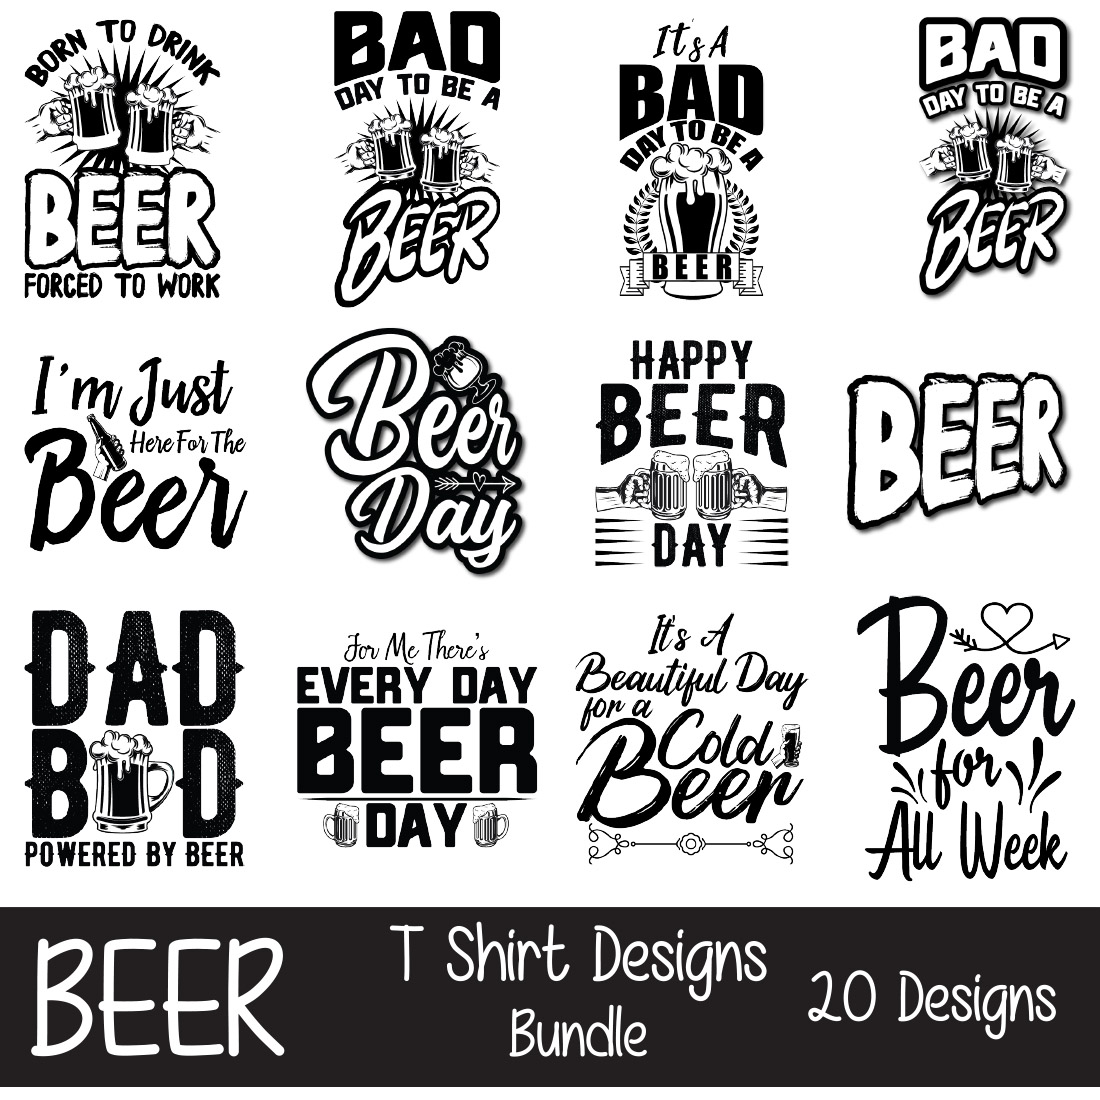 Beer T-Shirt Designs Bundle main image.